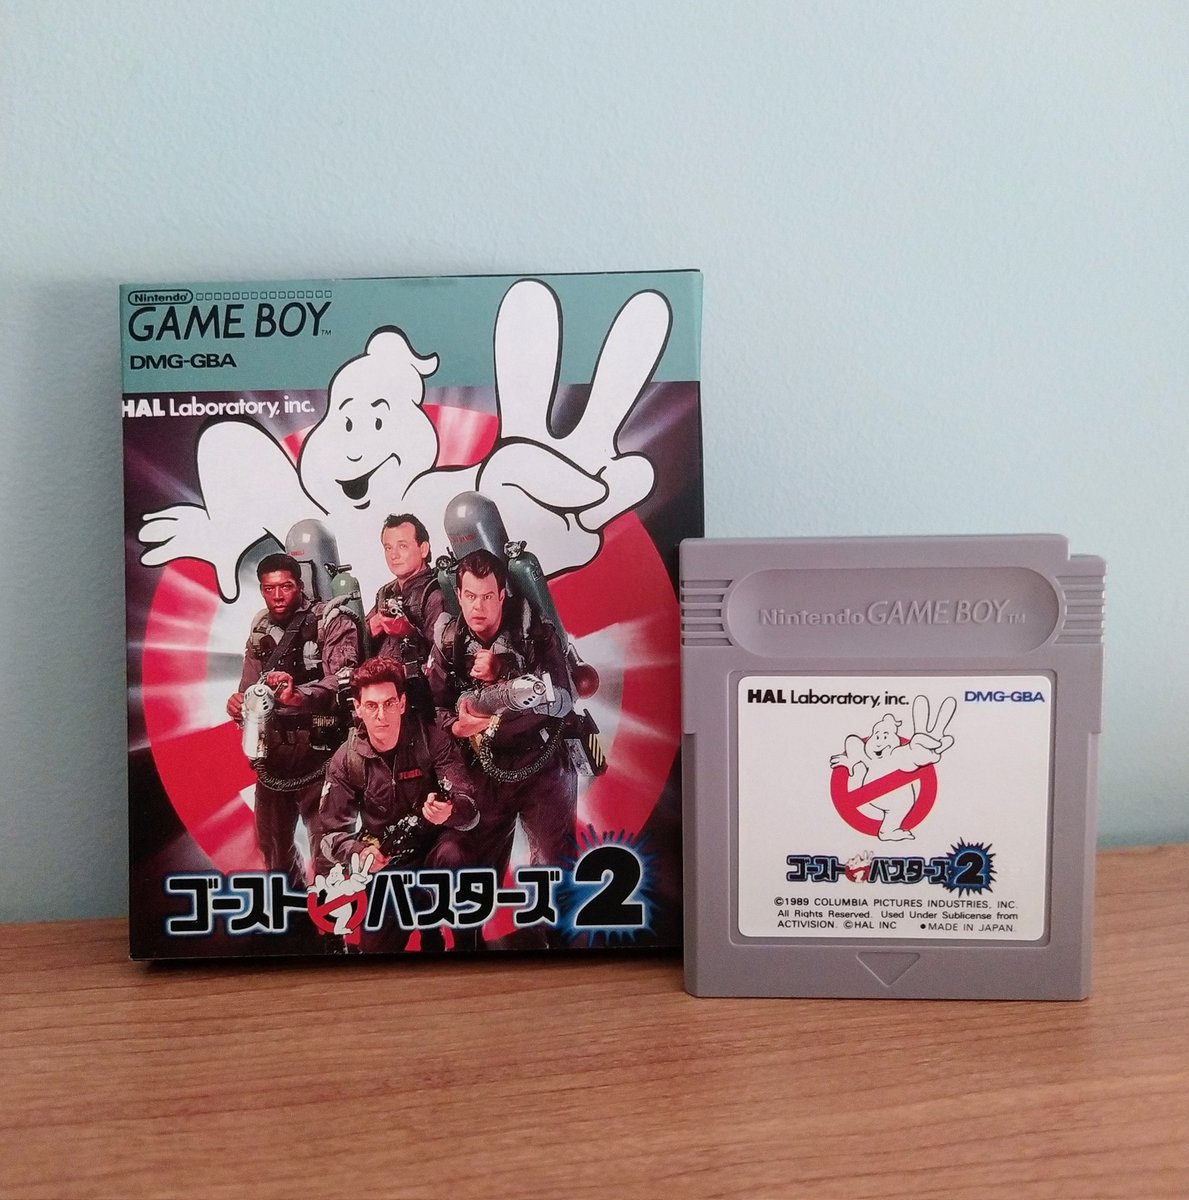 #Hallaboratory 1989
#Ghostbusters2 👻🔫
#Gameboy 👾 #Nintendo 🍄